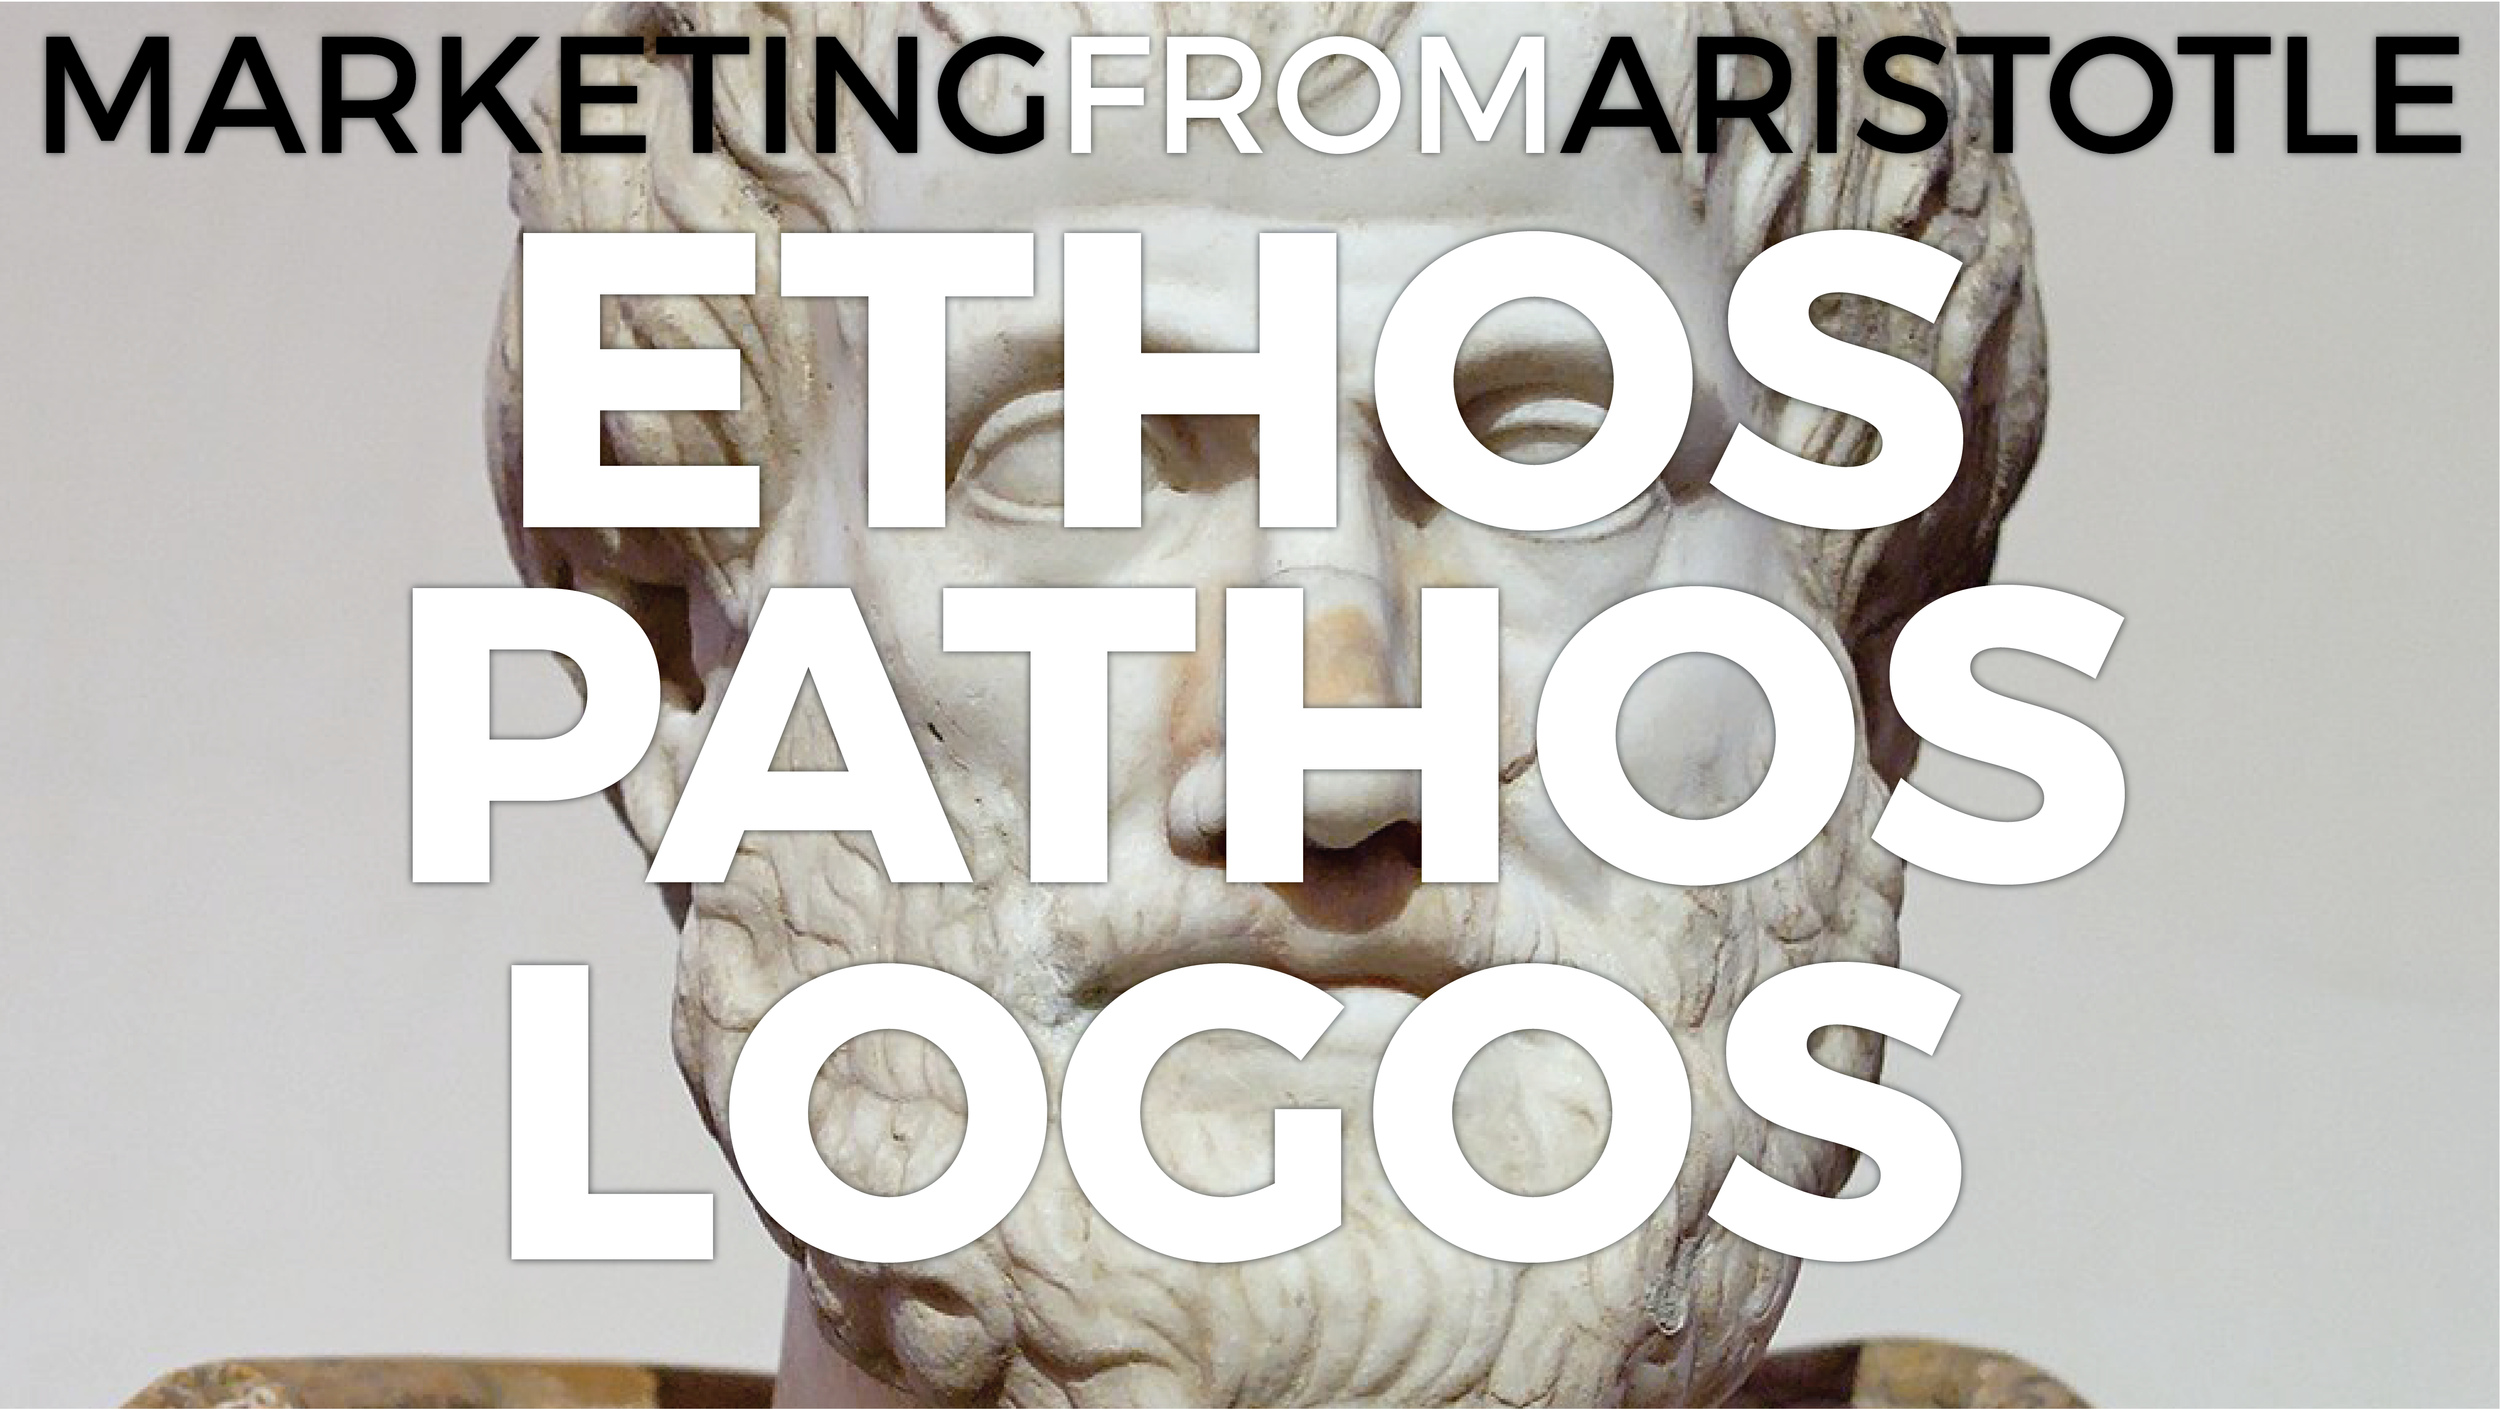 ethos pathos logos commercial examples